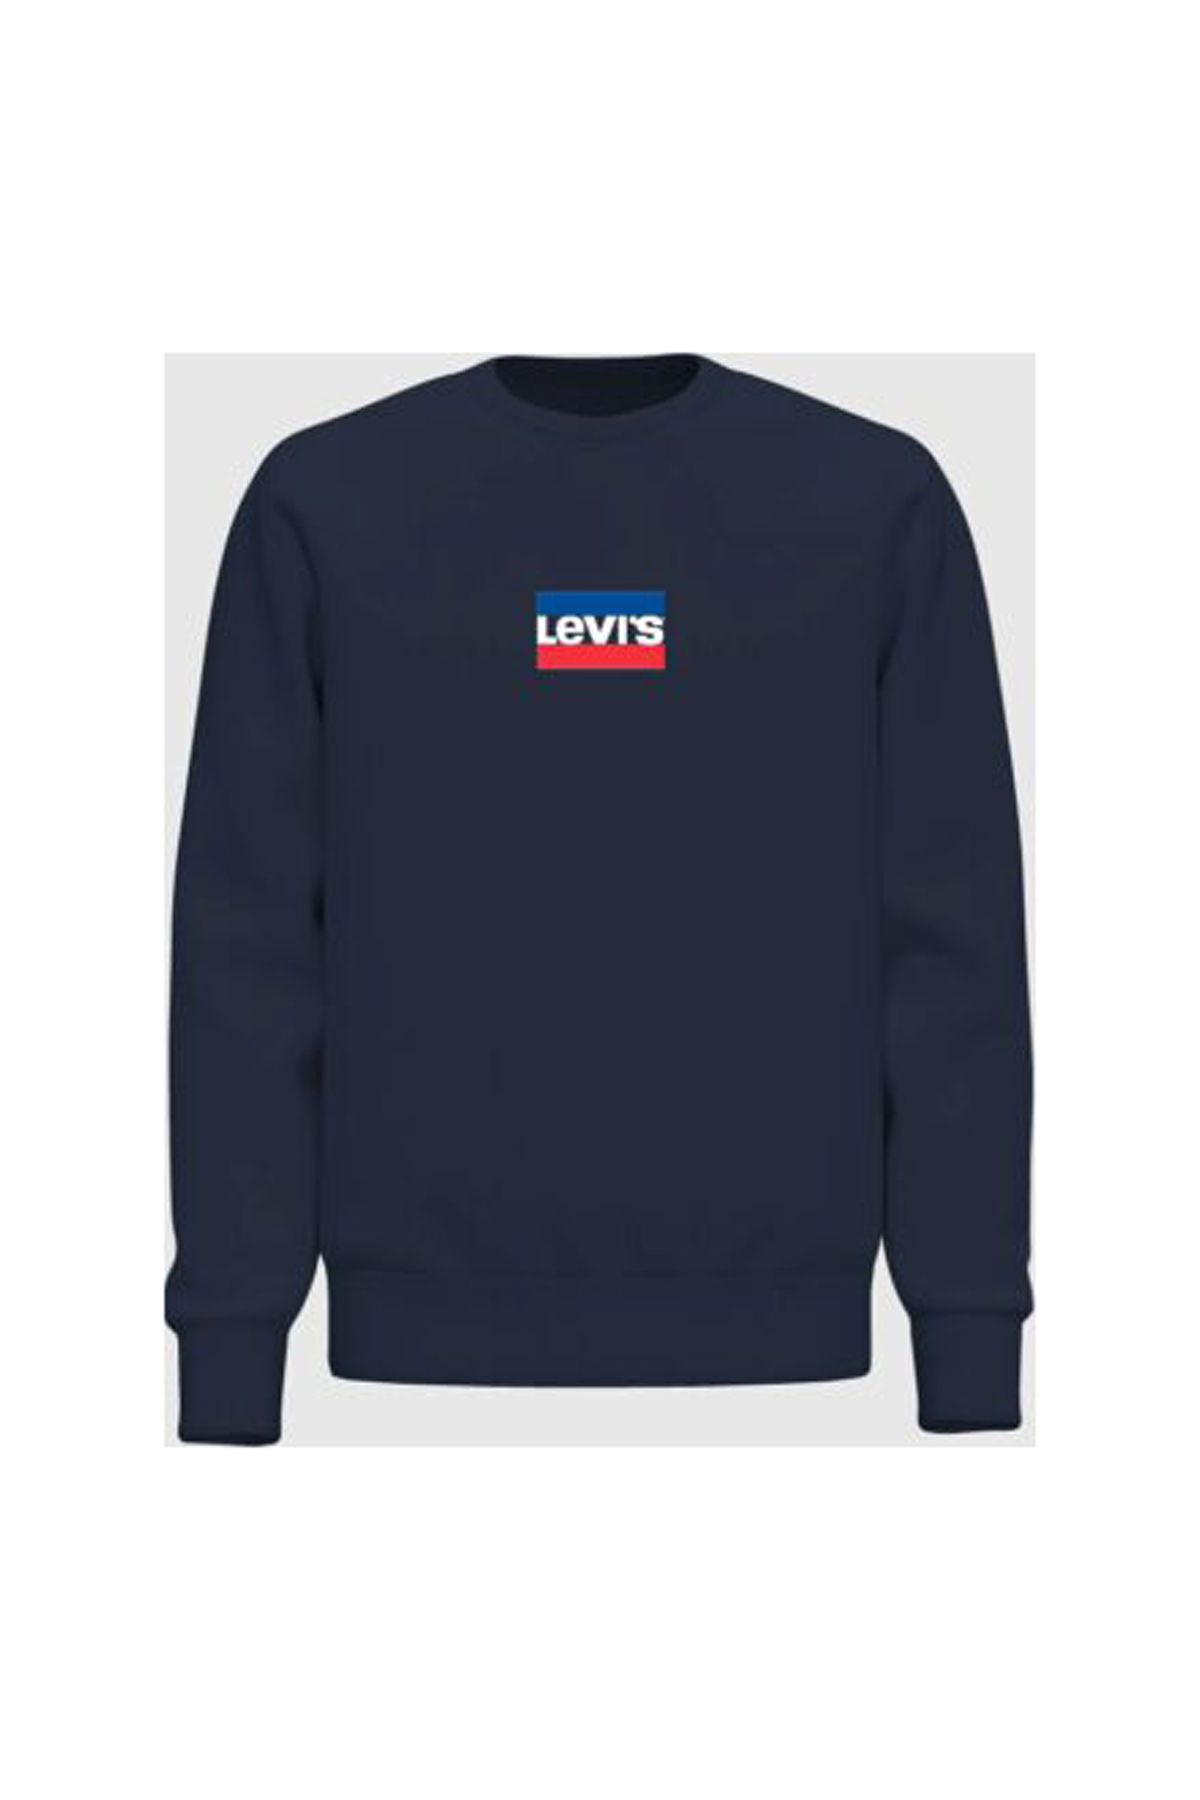 Levi's Standard Graphic Sweatshirt